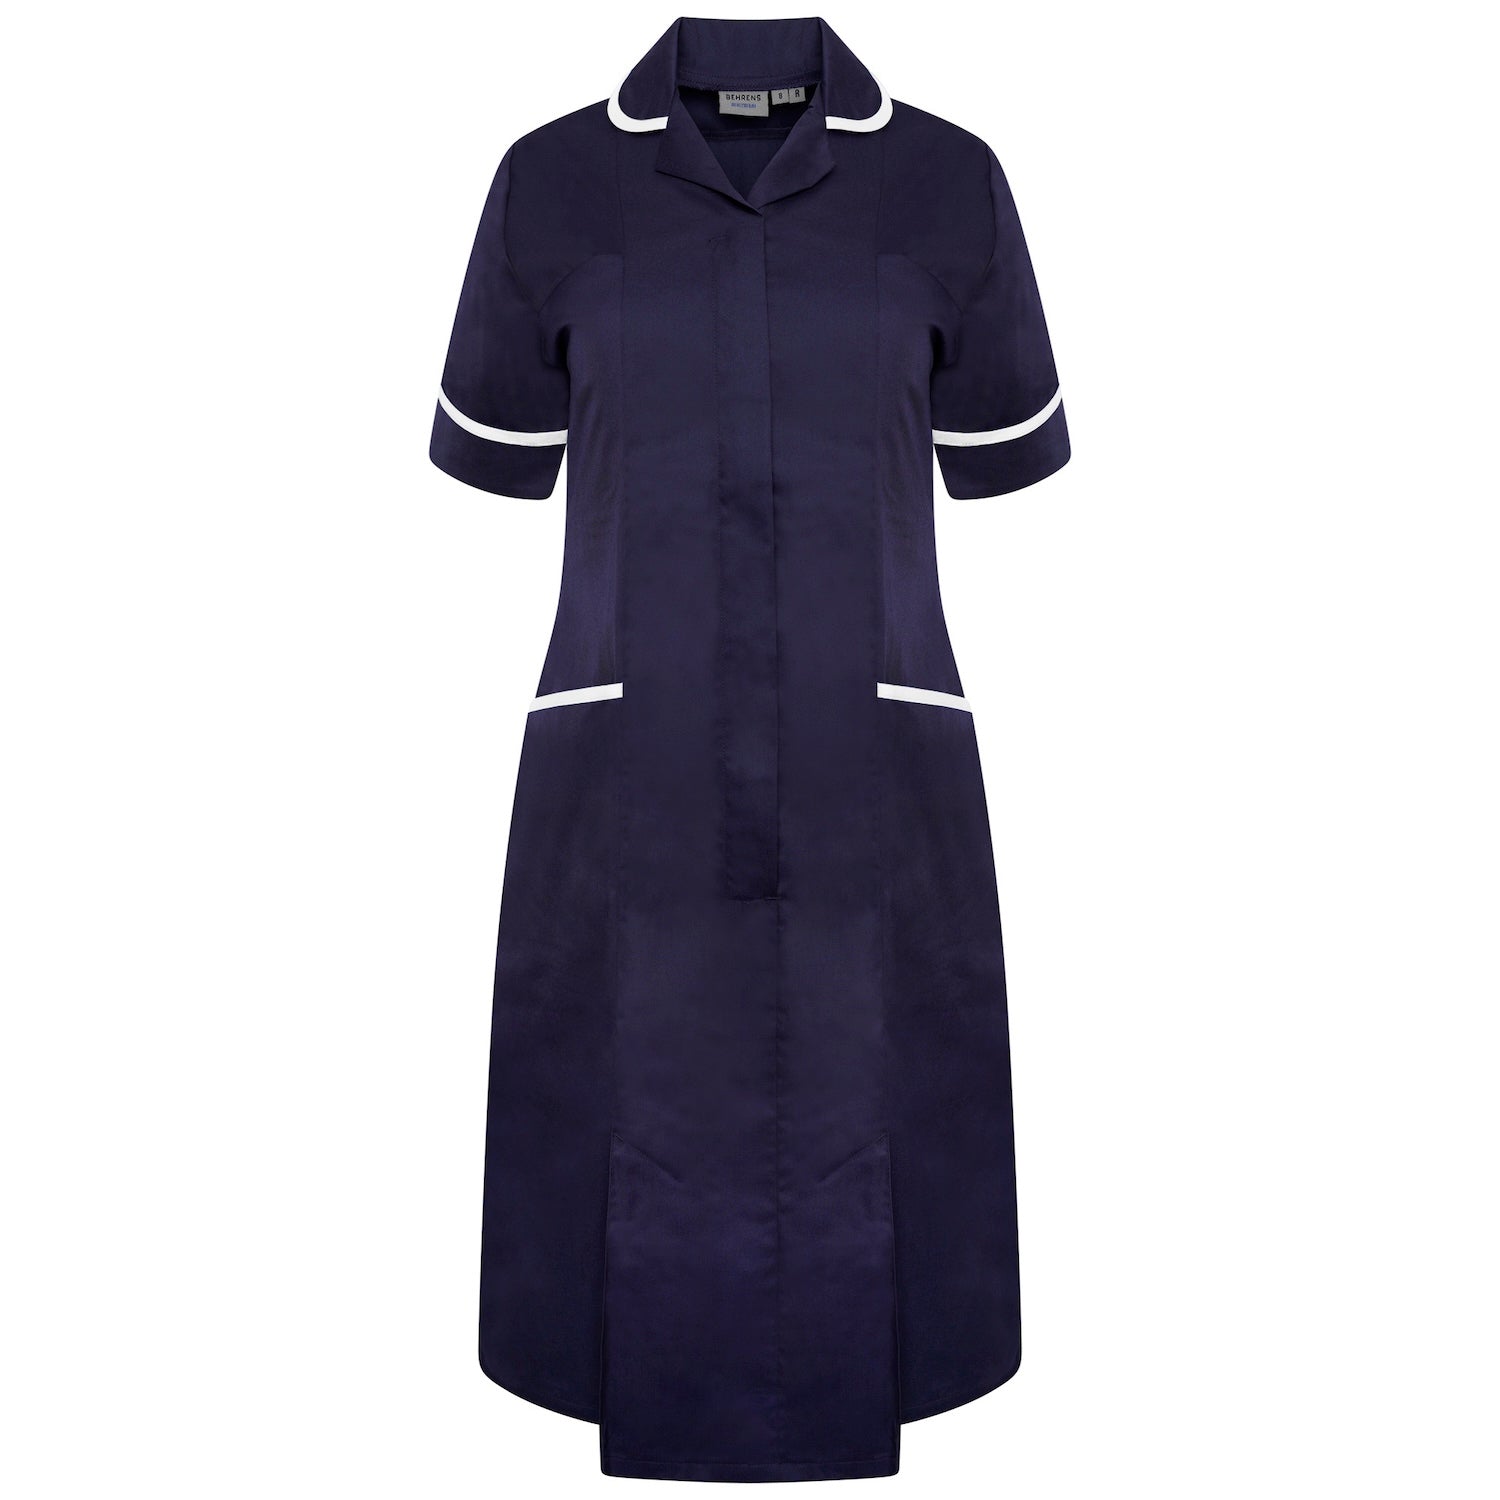 Ladies Healthcare Dress | Round Collar | Navy/White Trim